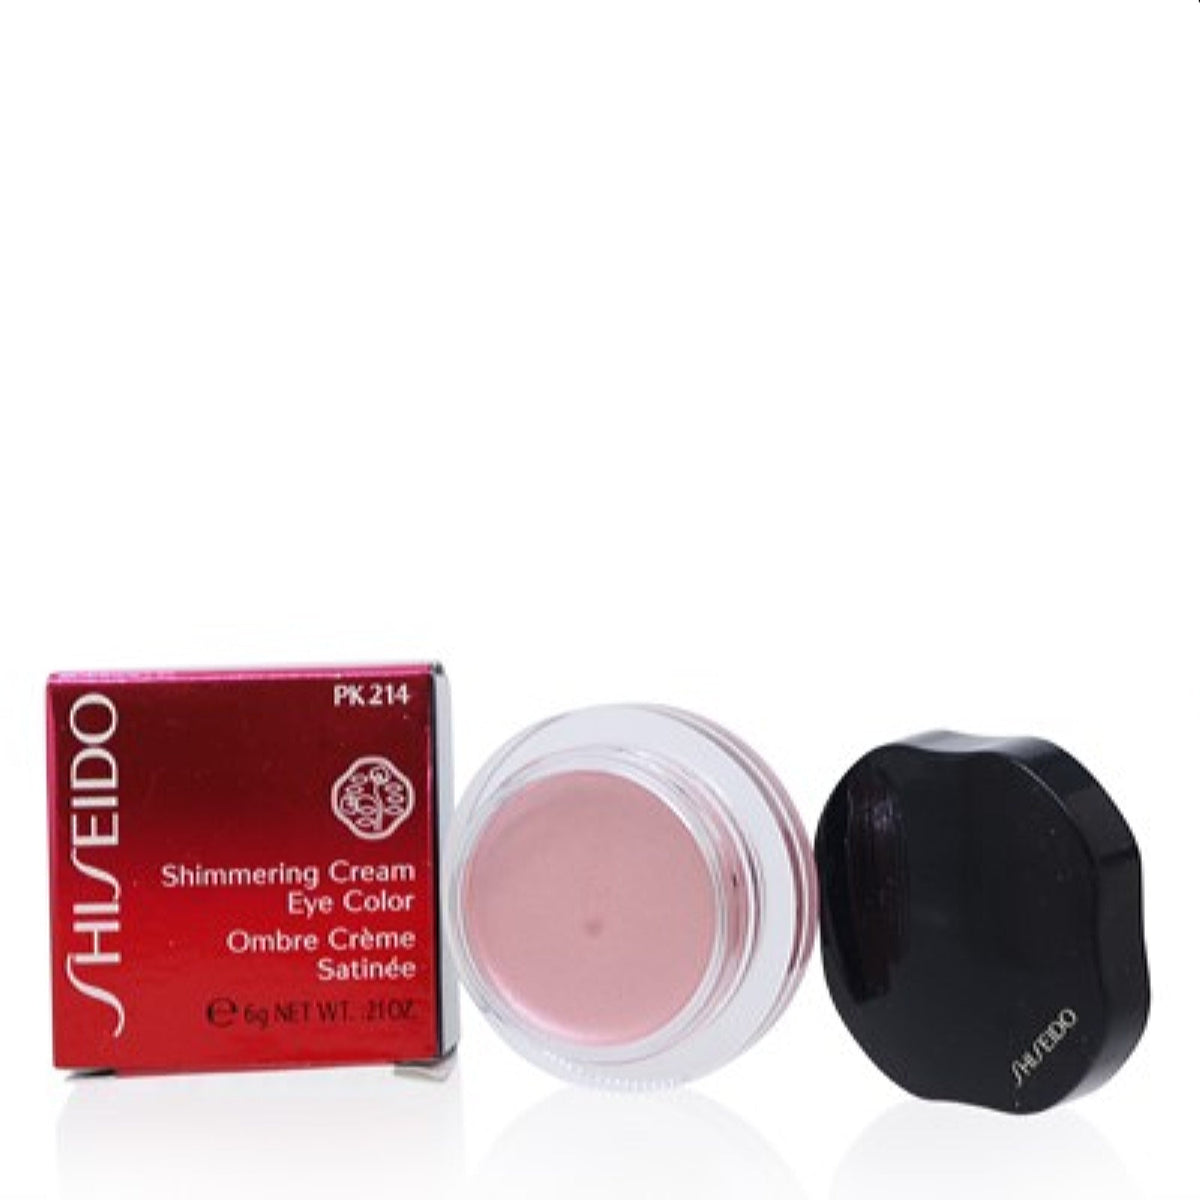 Shiseido Shimmering Cream Eye Color (Pk214)  0.21 Oz (6 Ml)  10347